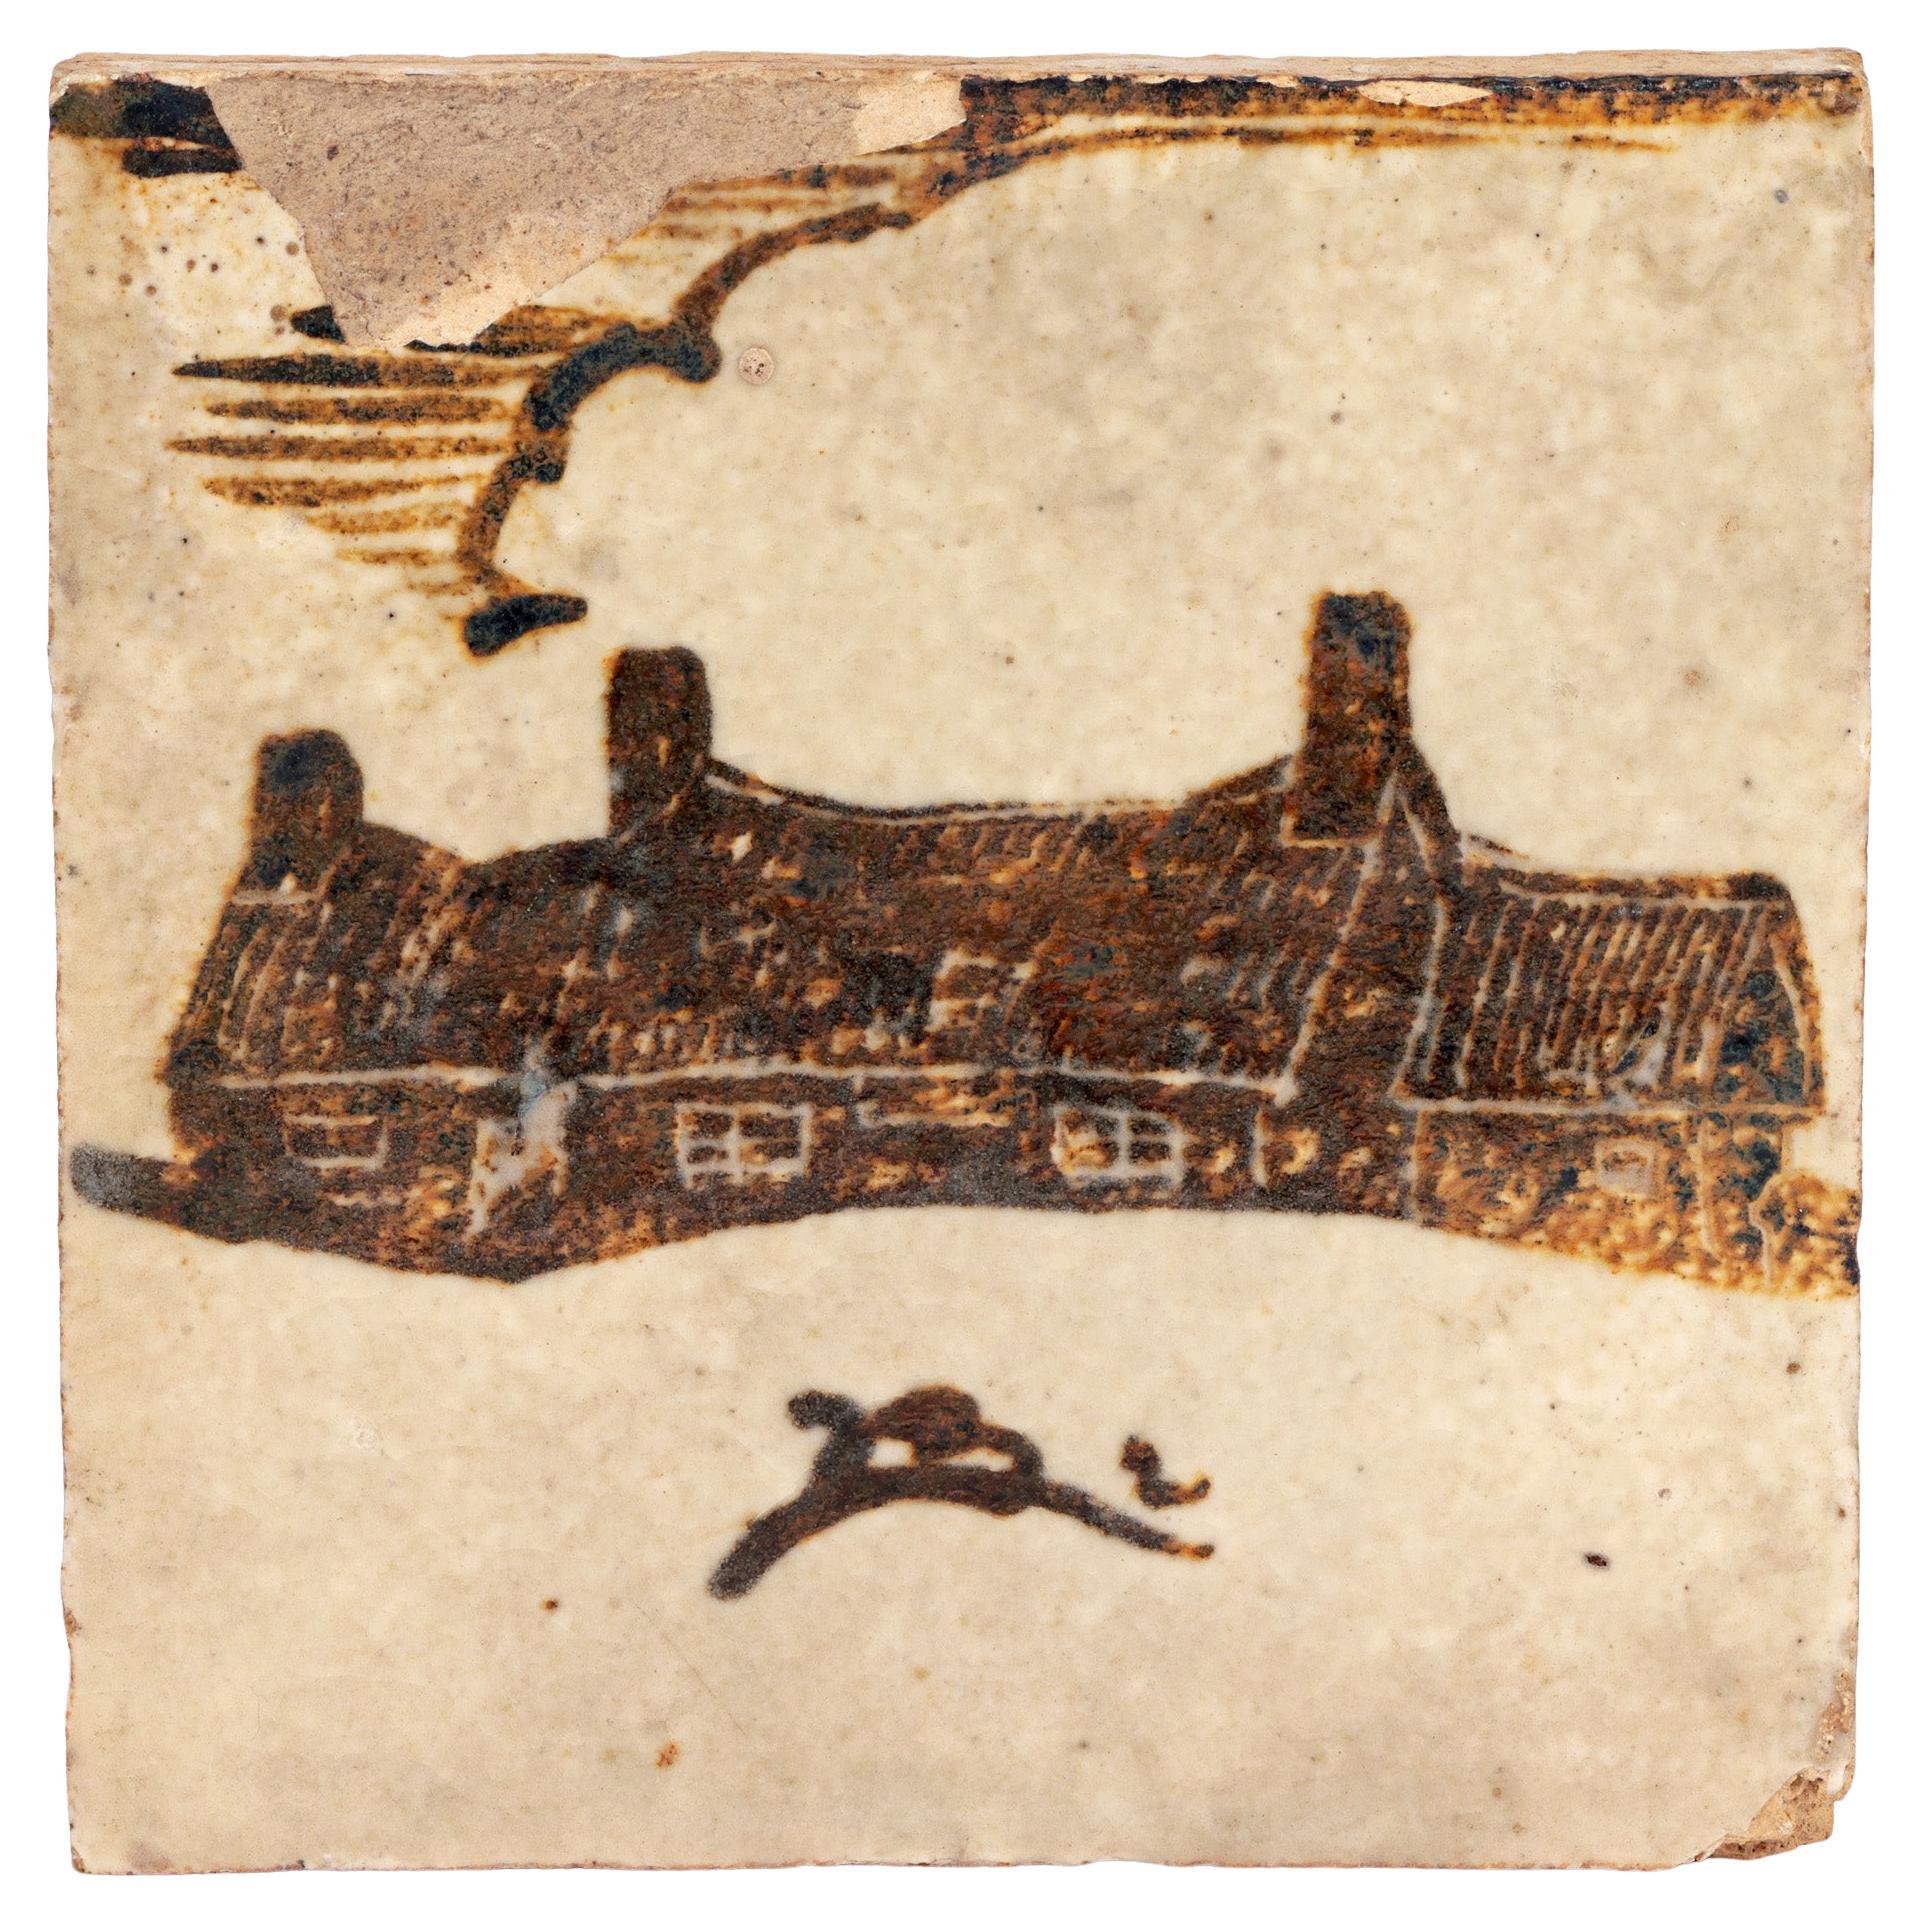 Bernard Leach Seltene frühe glasierte Leach-Keramikfliesen